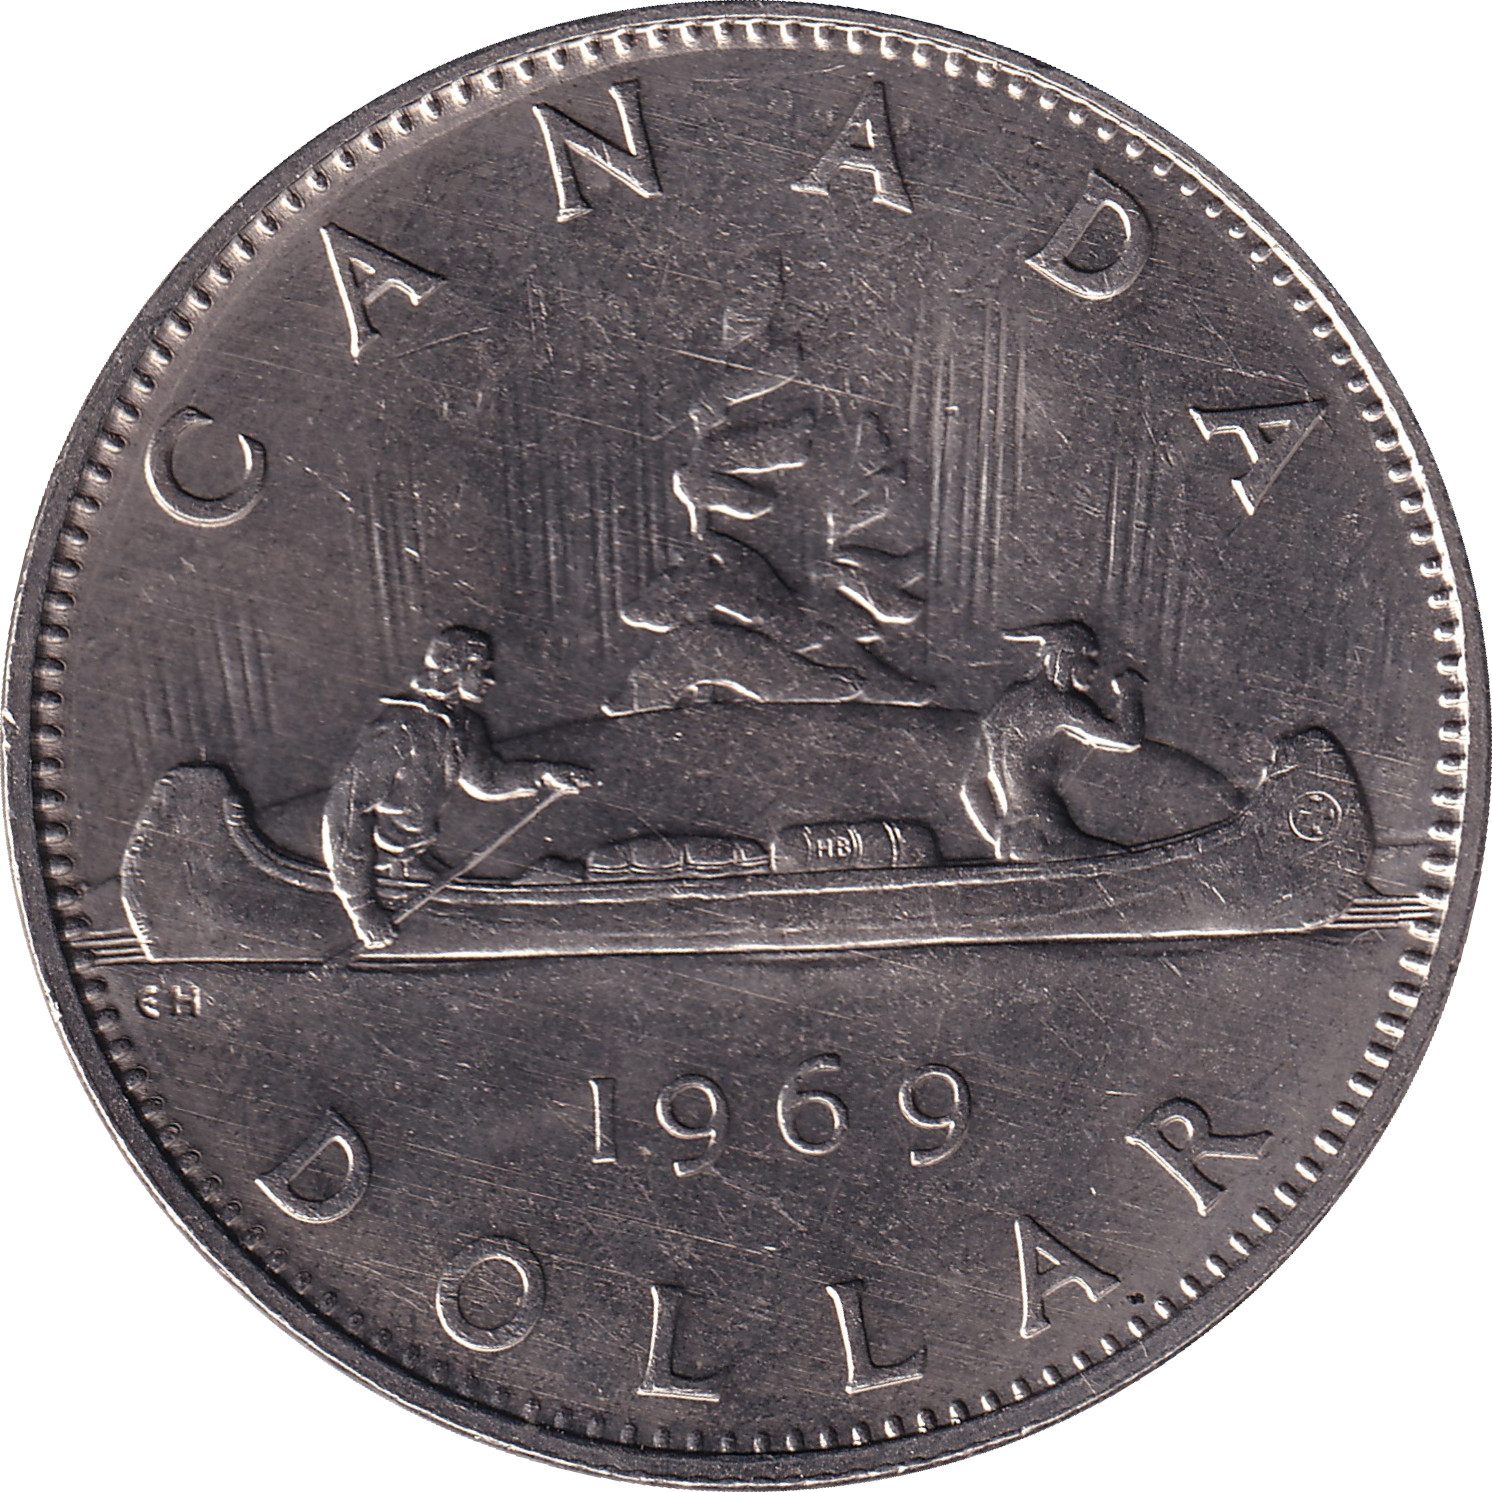 1 dollar - Elizabeth II - Buste mature - Voyageur